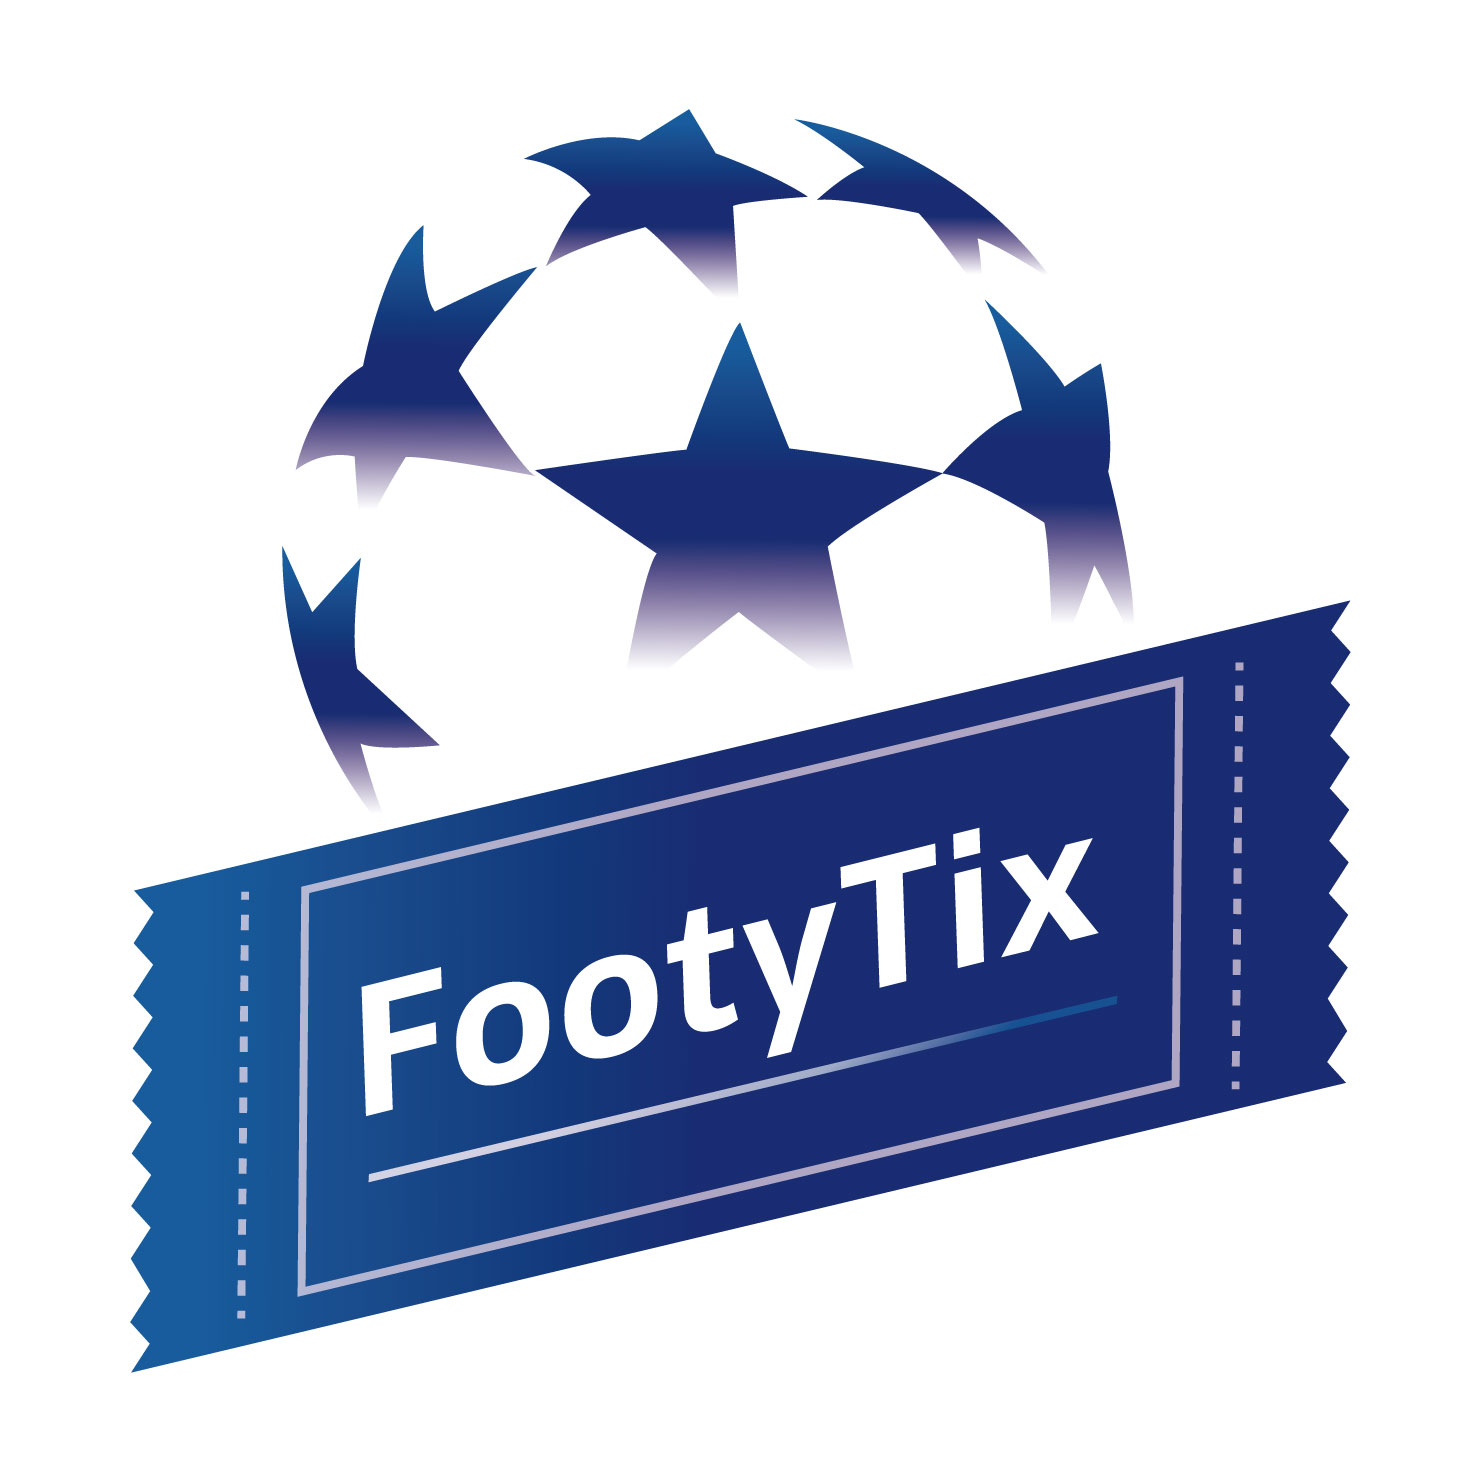 19 Daznで視聴できる海外サッカーコンテンツをどこよりも詳しく徹底解説 Footytix 海外サッカーチケット攻略ブログ